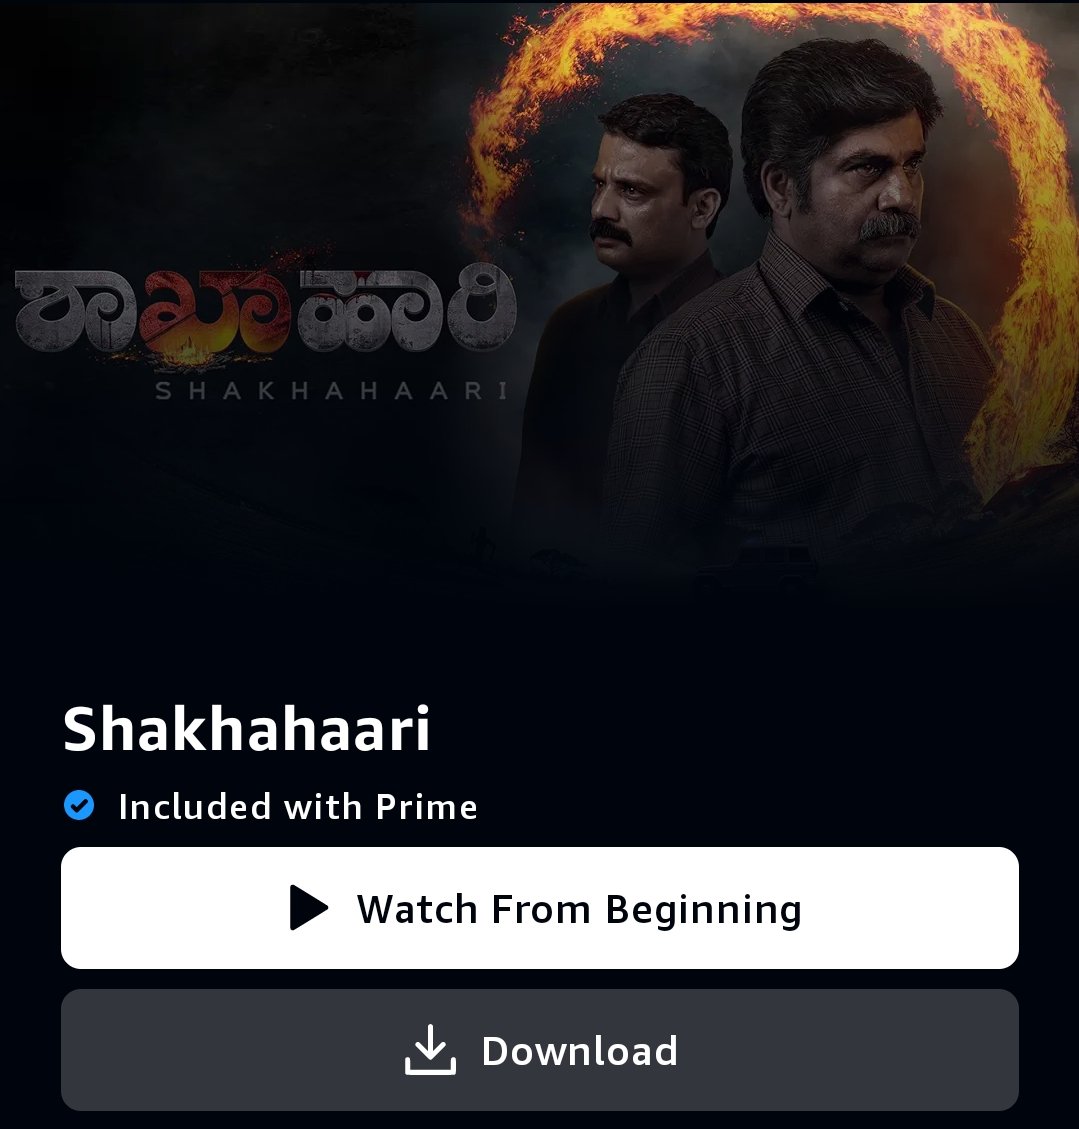 Nange #Shakhahaari film ista aythu, now it's available in on OTT Prime! @Shakhahaari @sandeepsunkad13 @KeelambiRajesh @NidhiHegde15